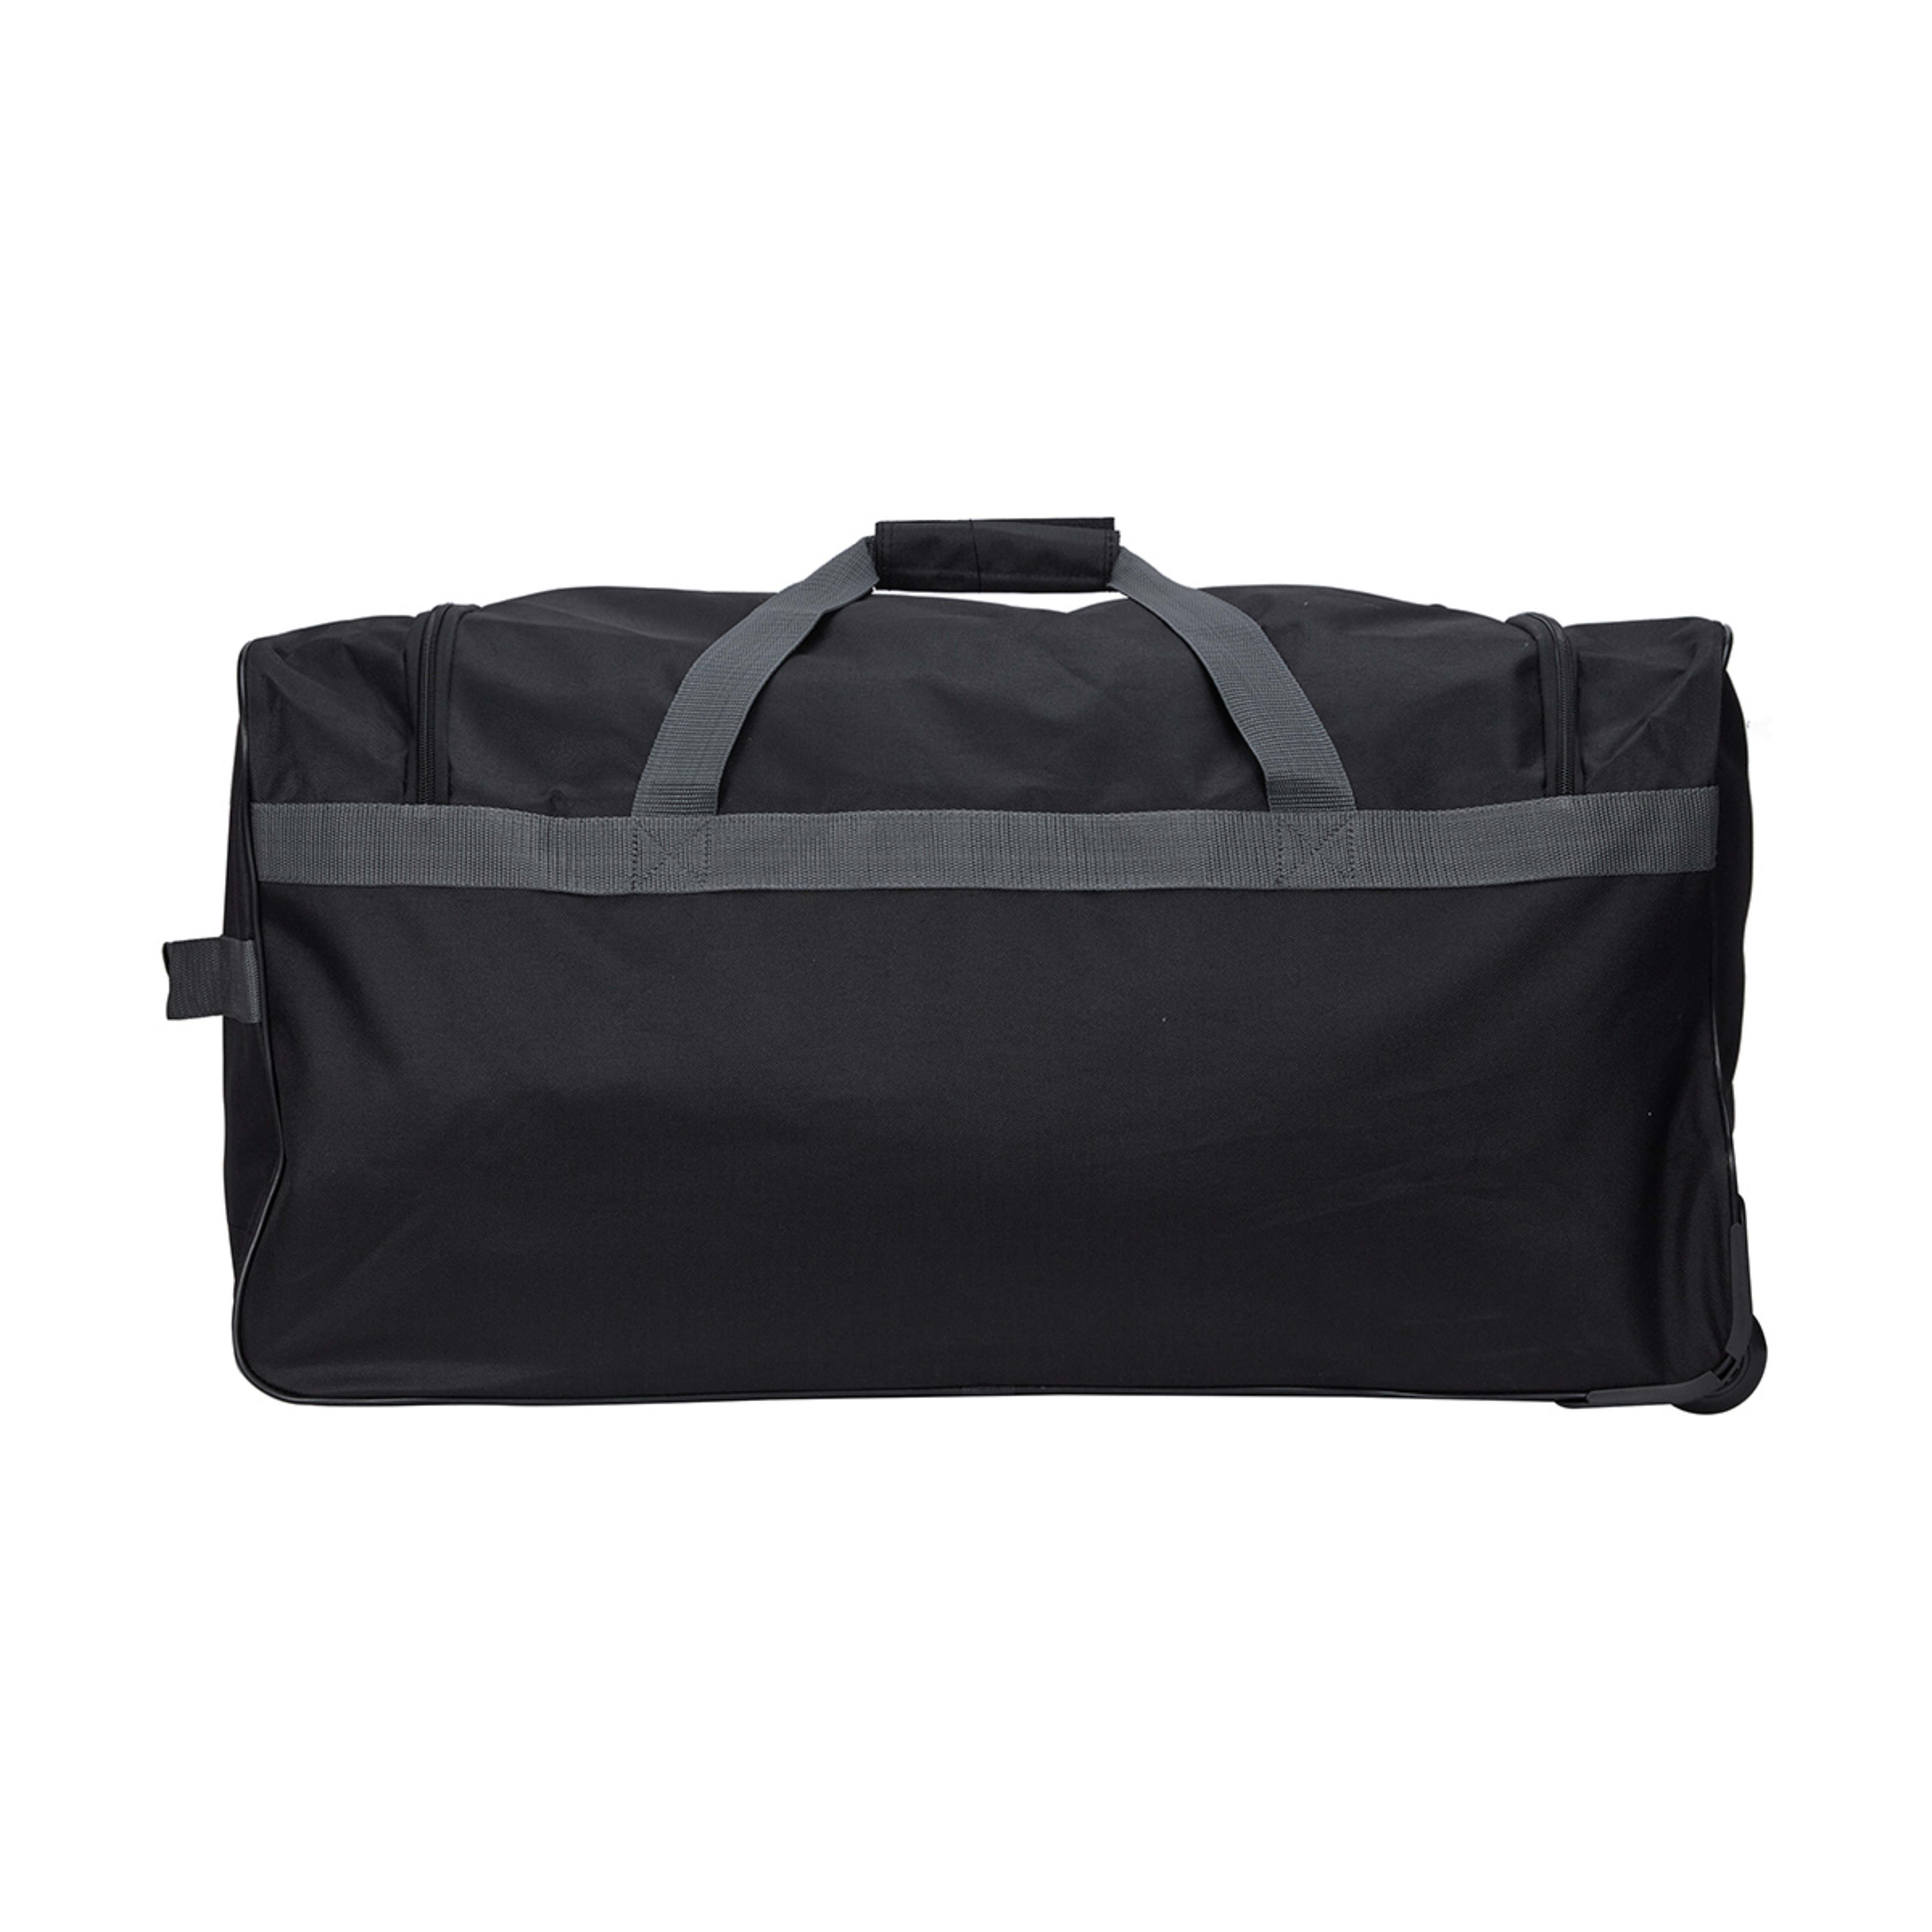 Duffle Bag with Wheels - Black - Kmart